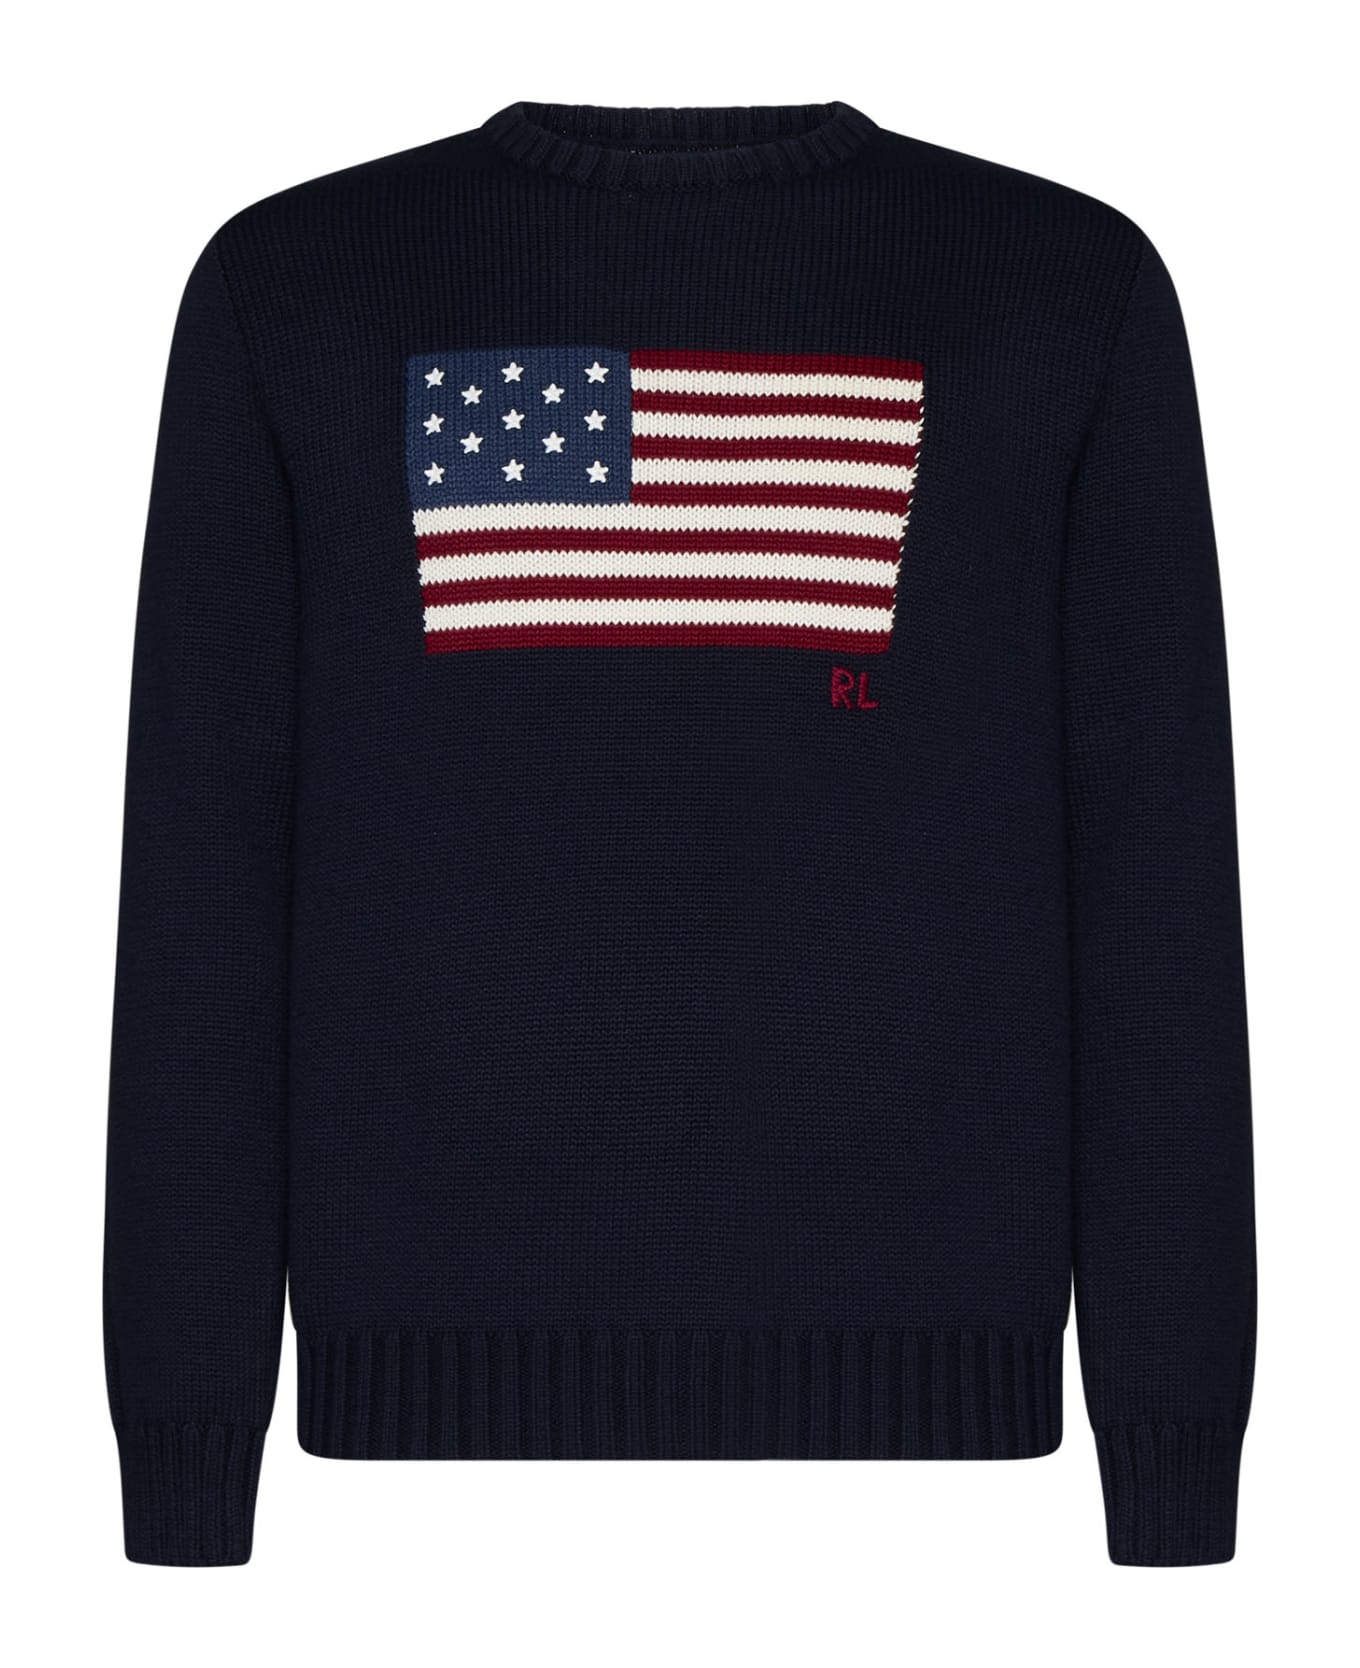 Polo Ralph Lauren Sweater - Hunter navy